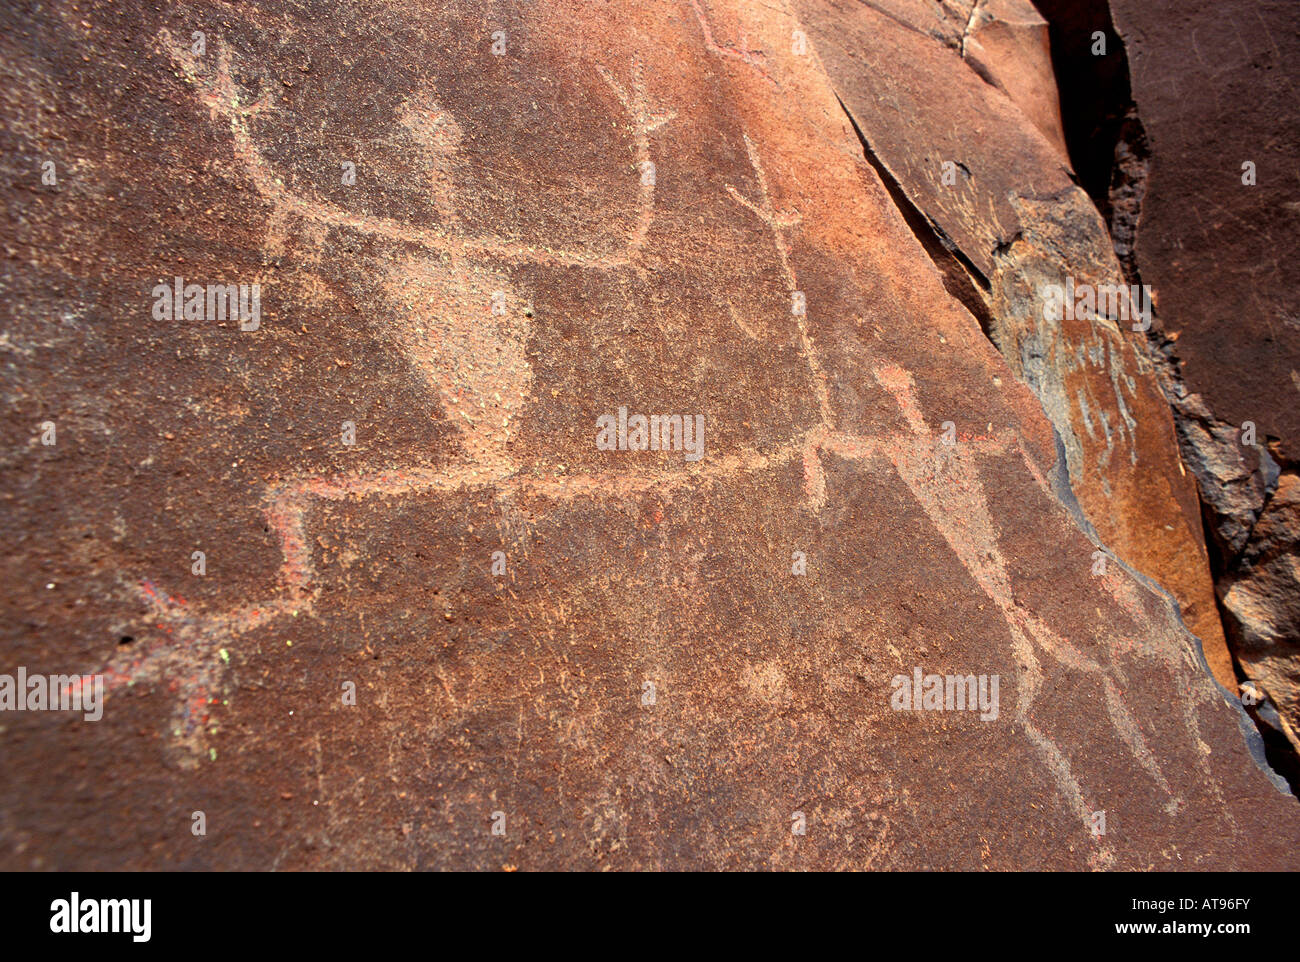 Well preserved Native Hawaiian petroglyphs on a rock face in Olowalu, Maui. Stock Photo